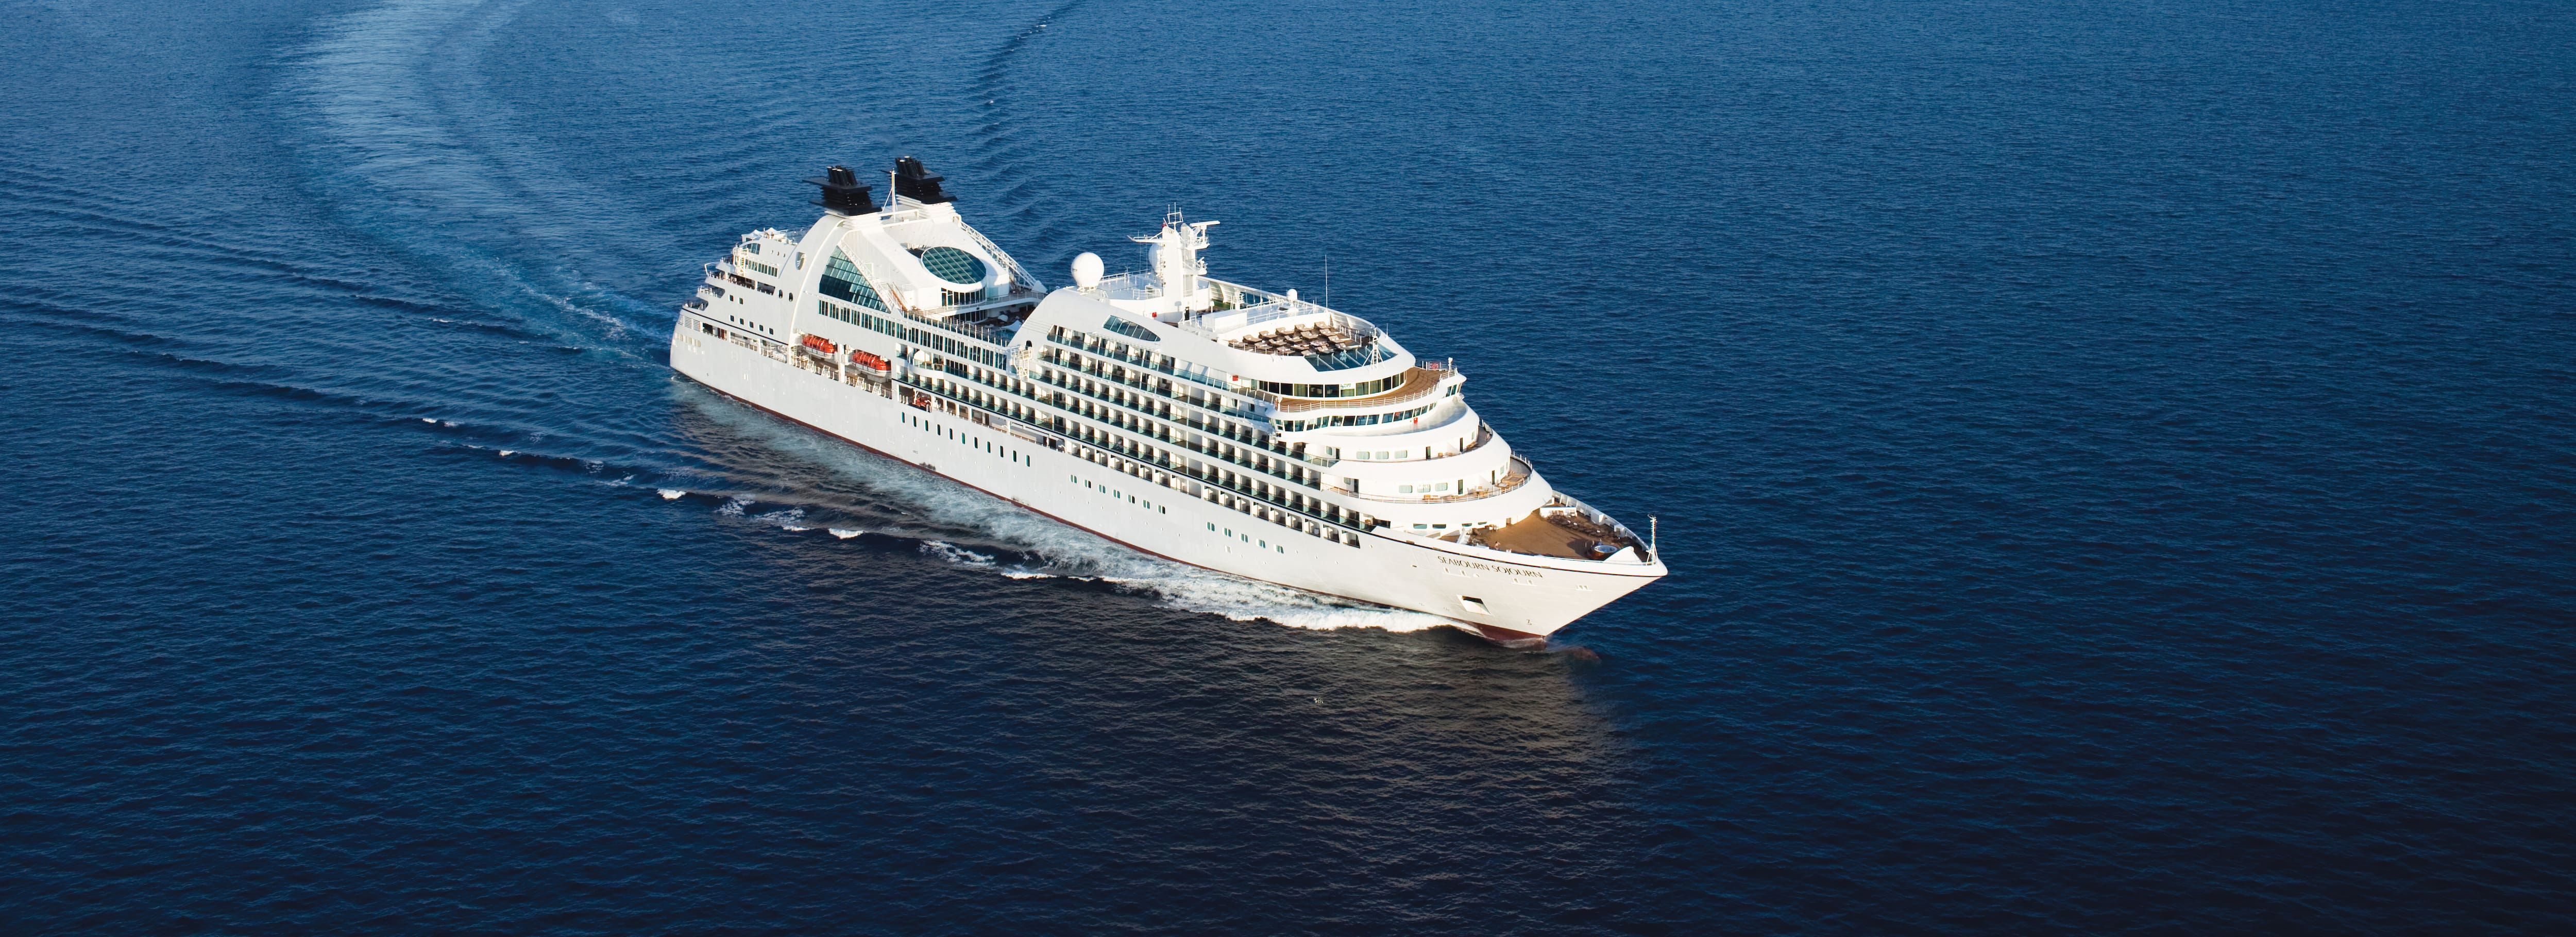 seabourn sojourn cruises 2021